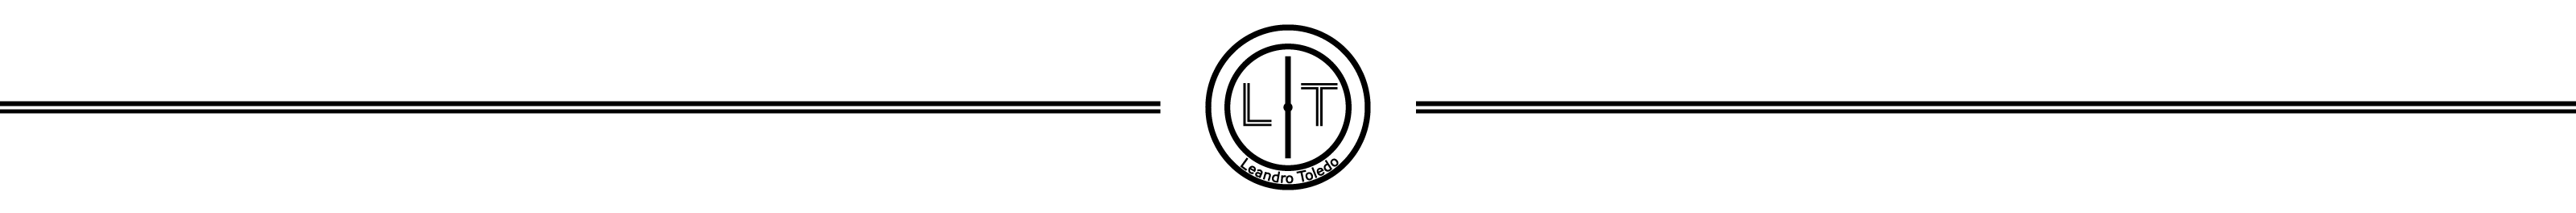 Leandro Toledos profilbanner